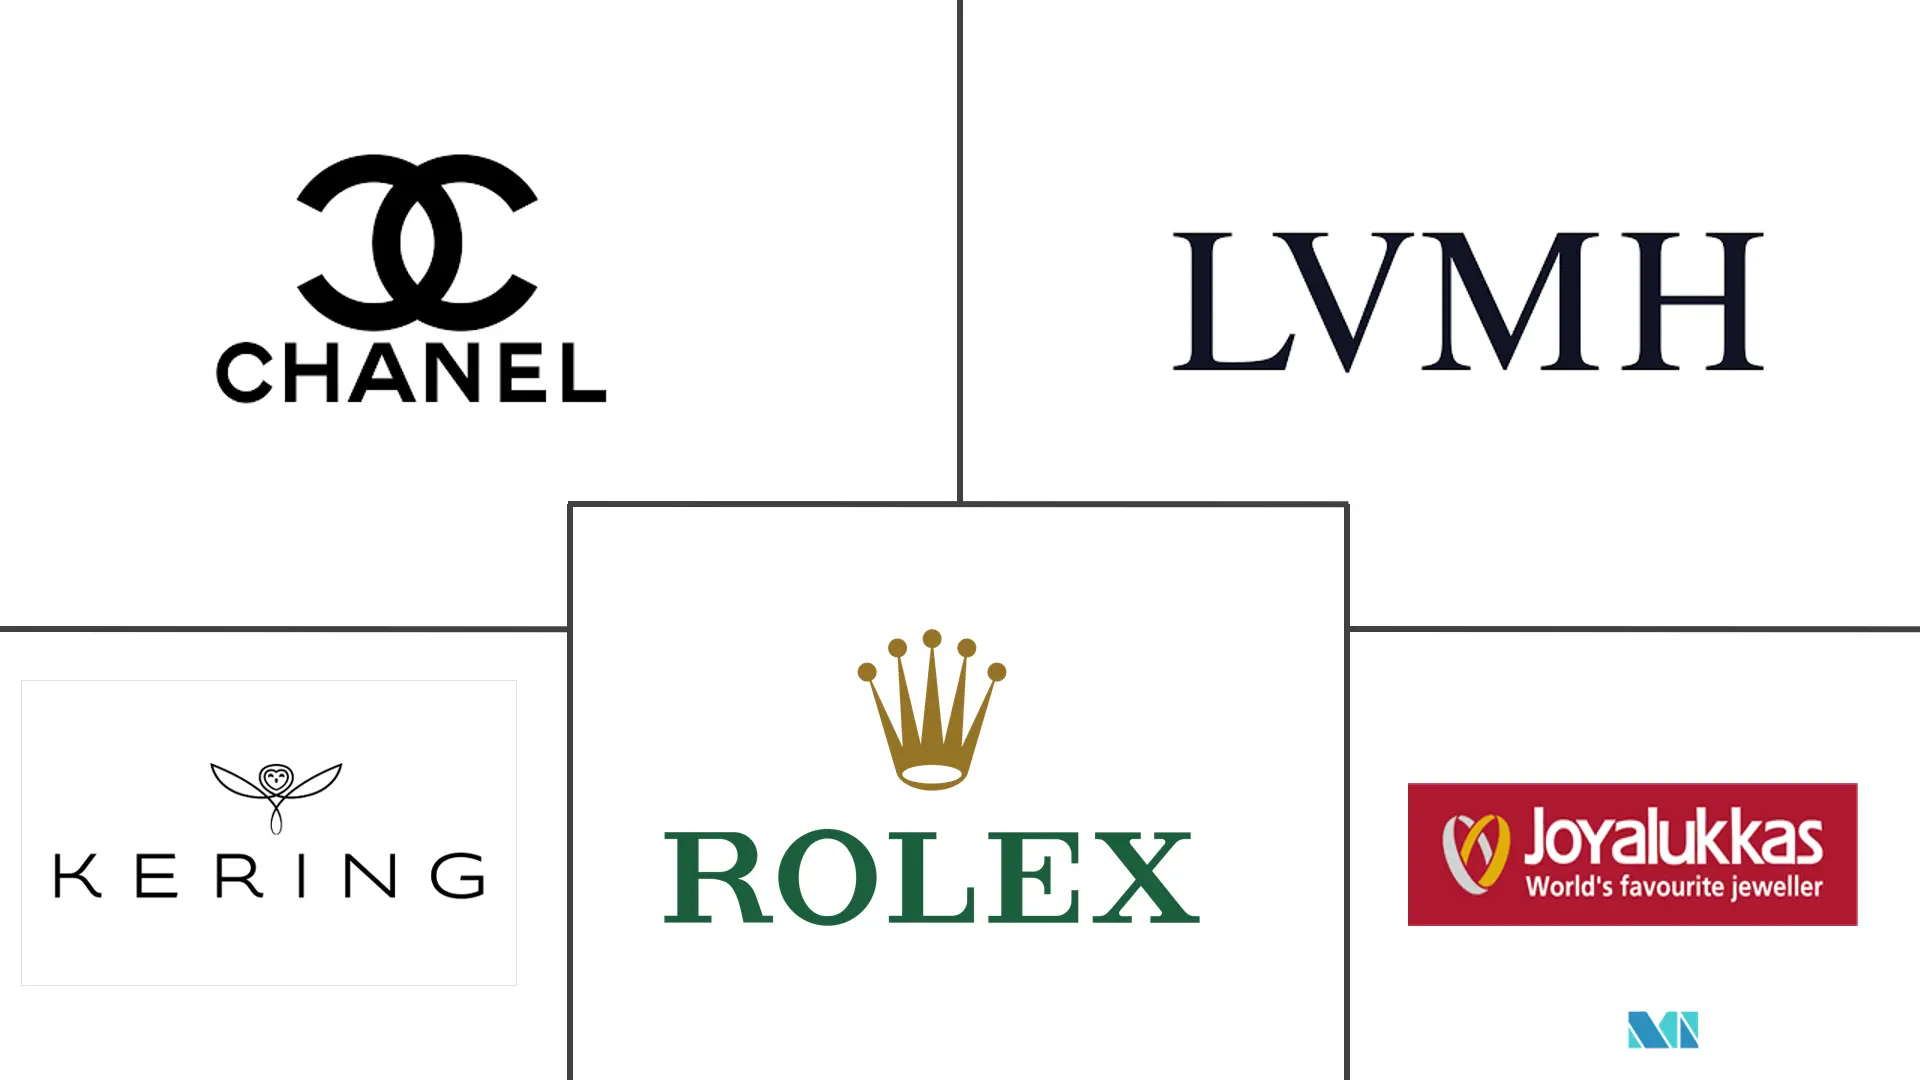 Qatar Luxury Good Market  Major Players